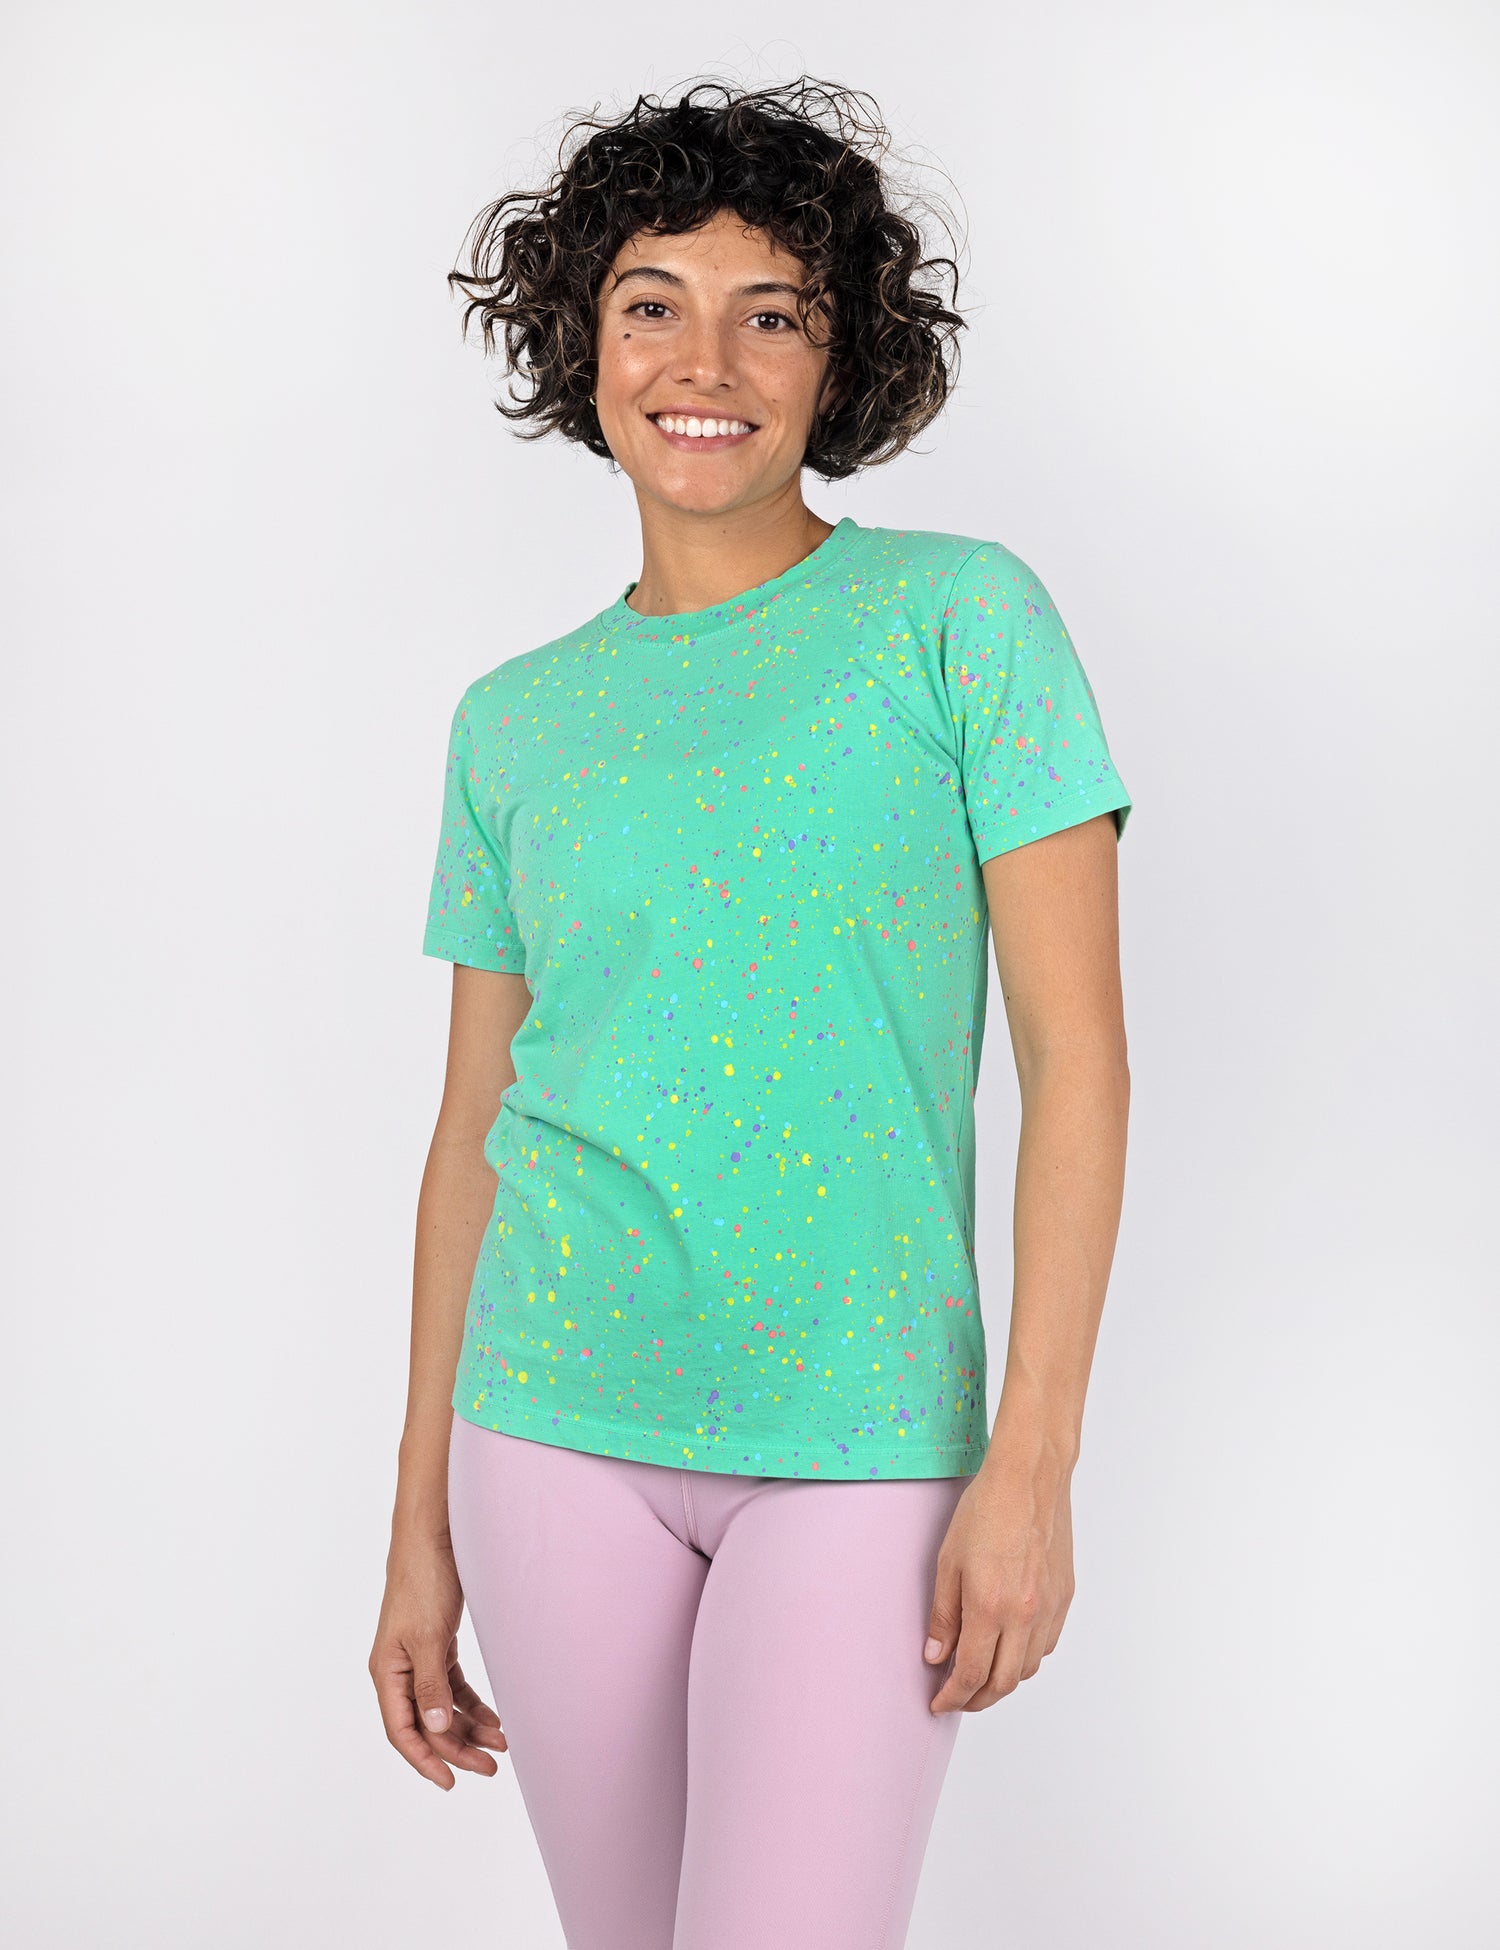 woman wearing a confetti painted t shirt